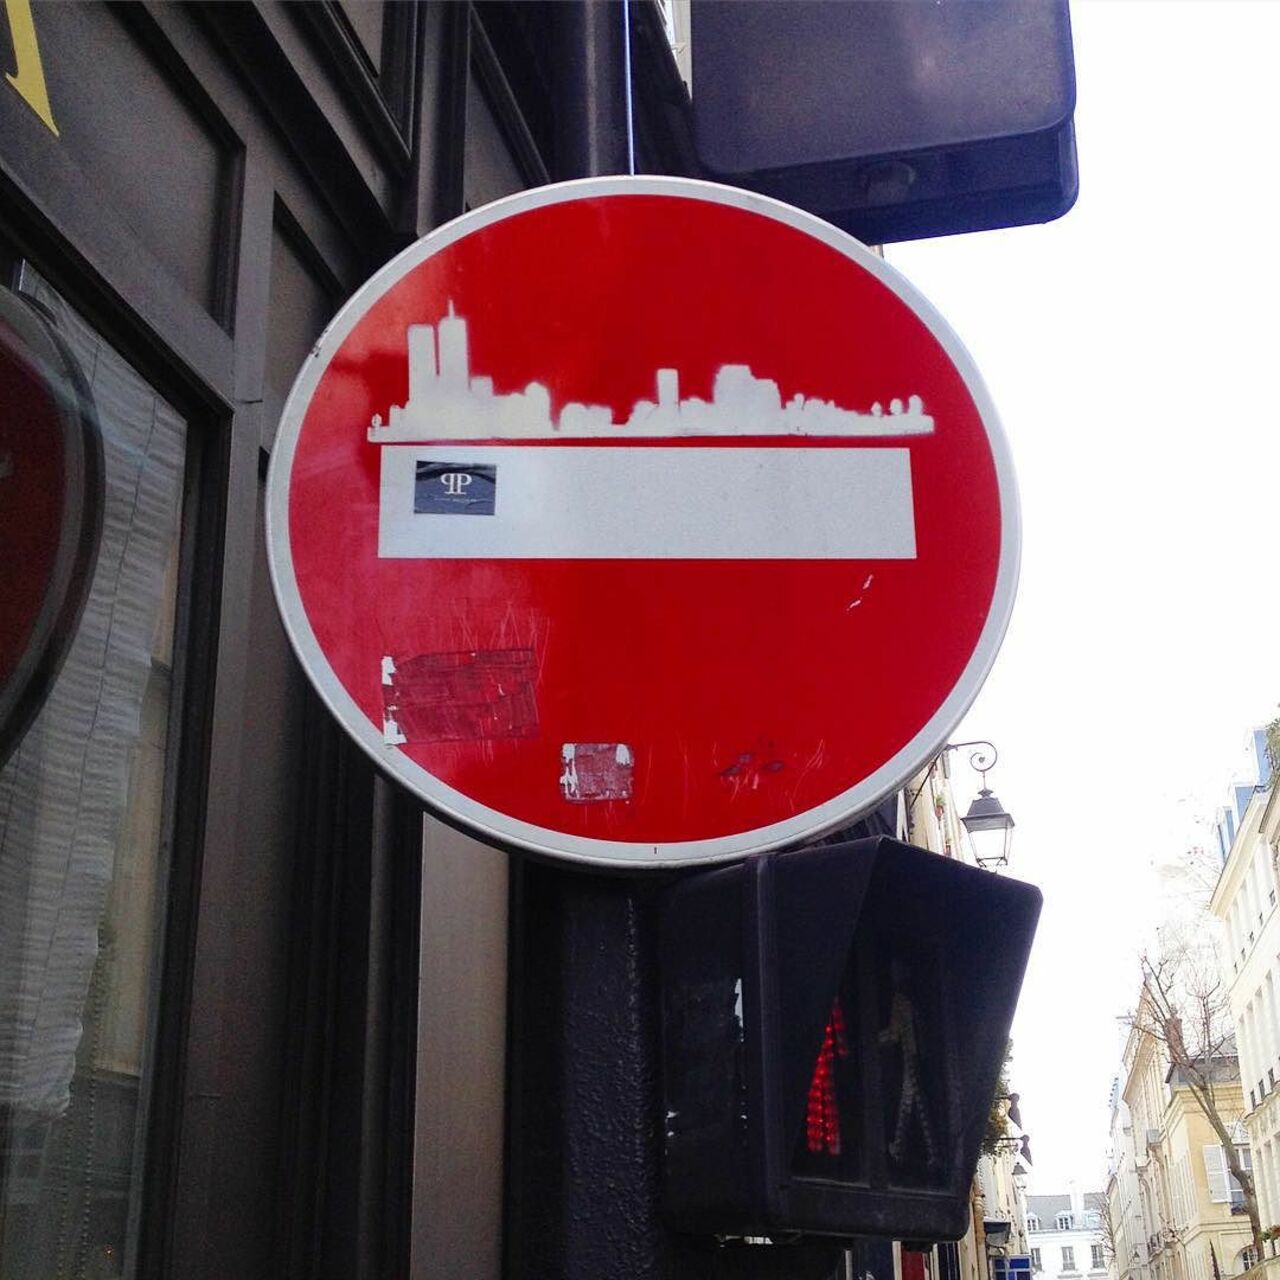 #Paris #graffiti photo by benapix http://ift.tt/1RxWnKG #StreetArt https://t.co/FrqZkTmA9u https://goo.gl/t4fpx2